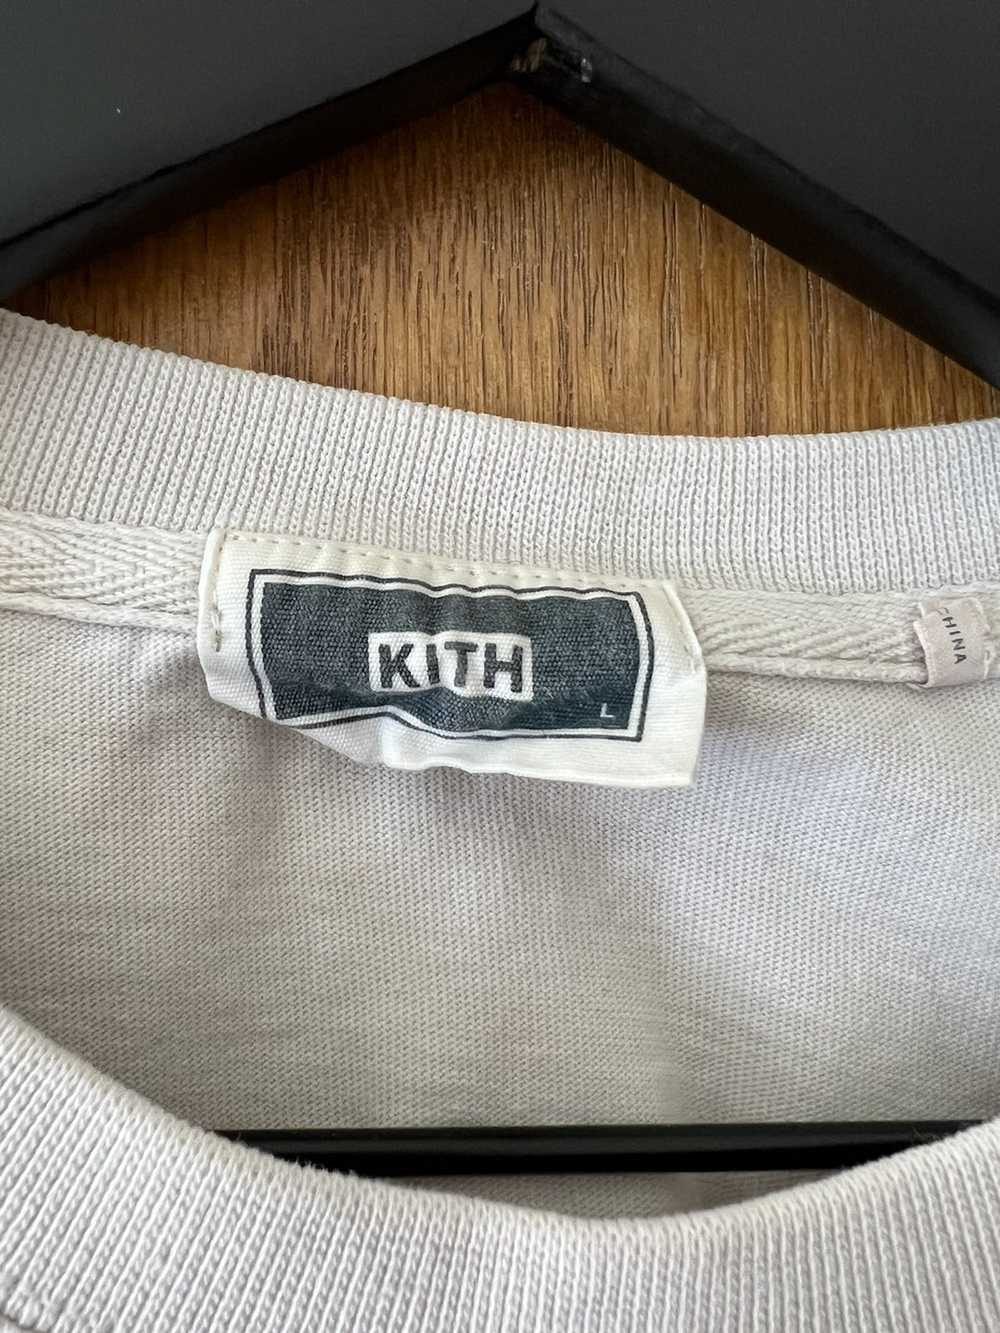 Kith Kith LAX long sleeve tee - image 3